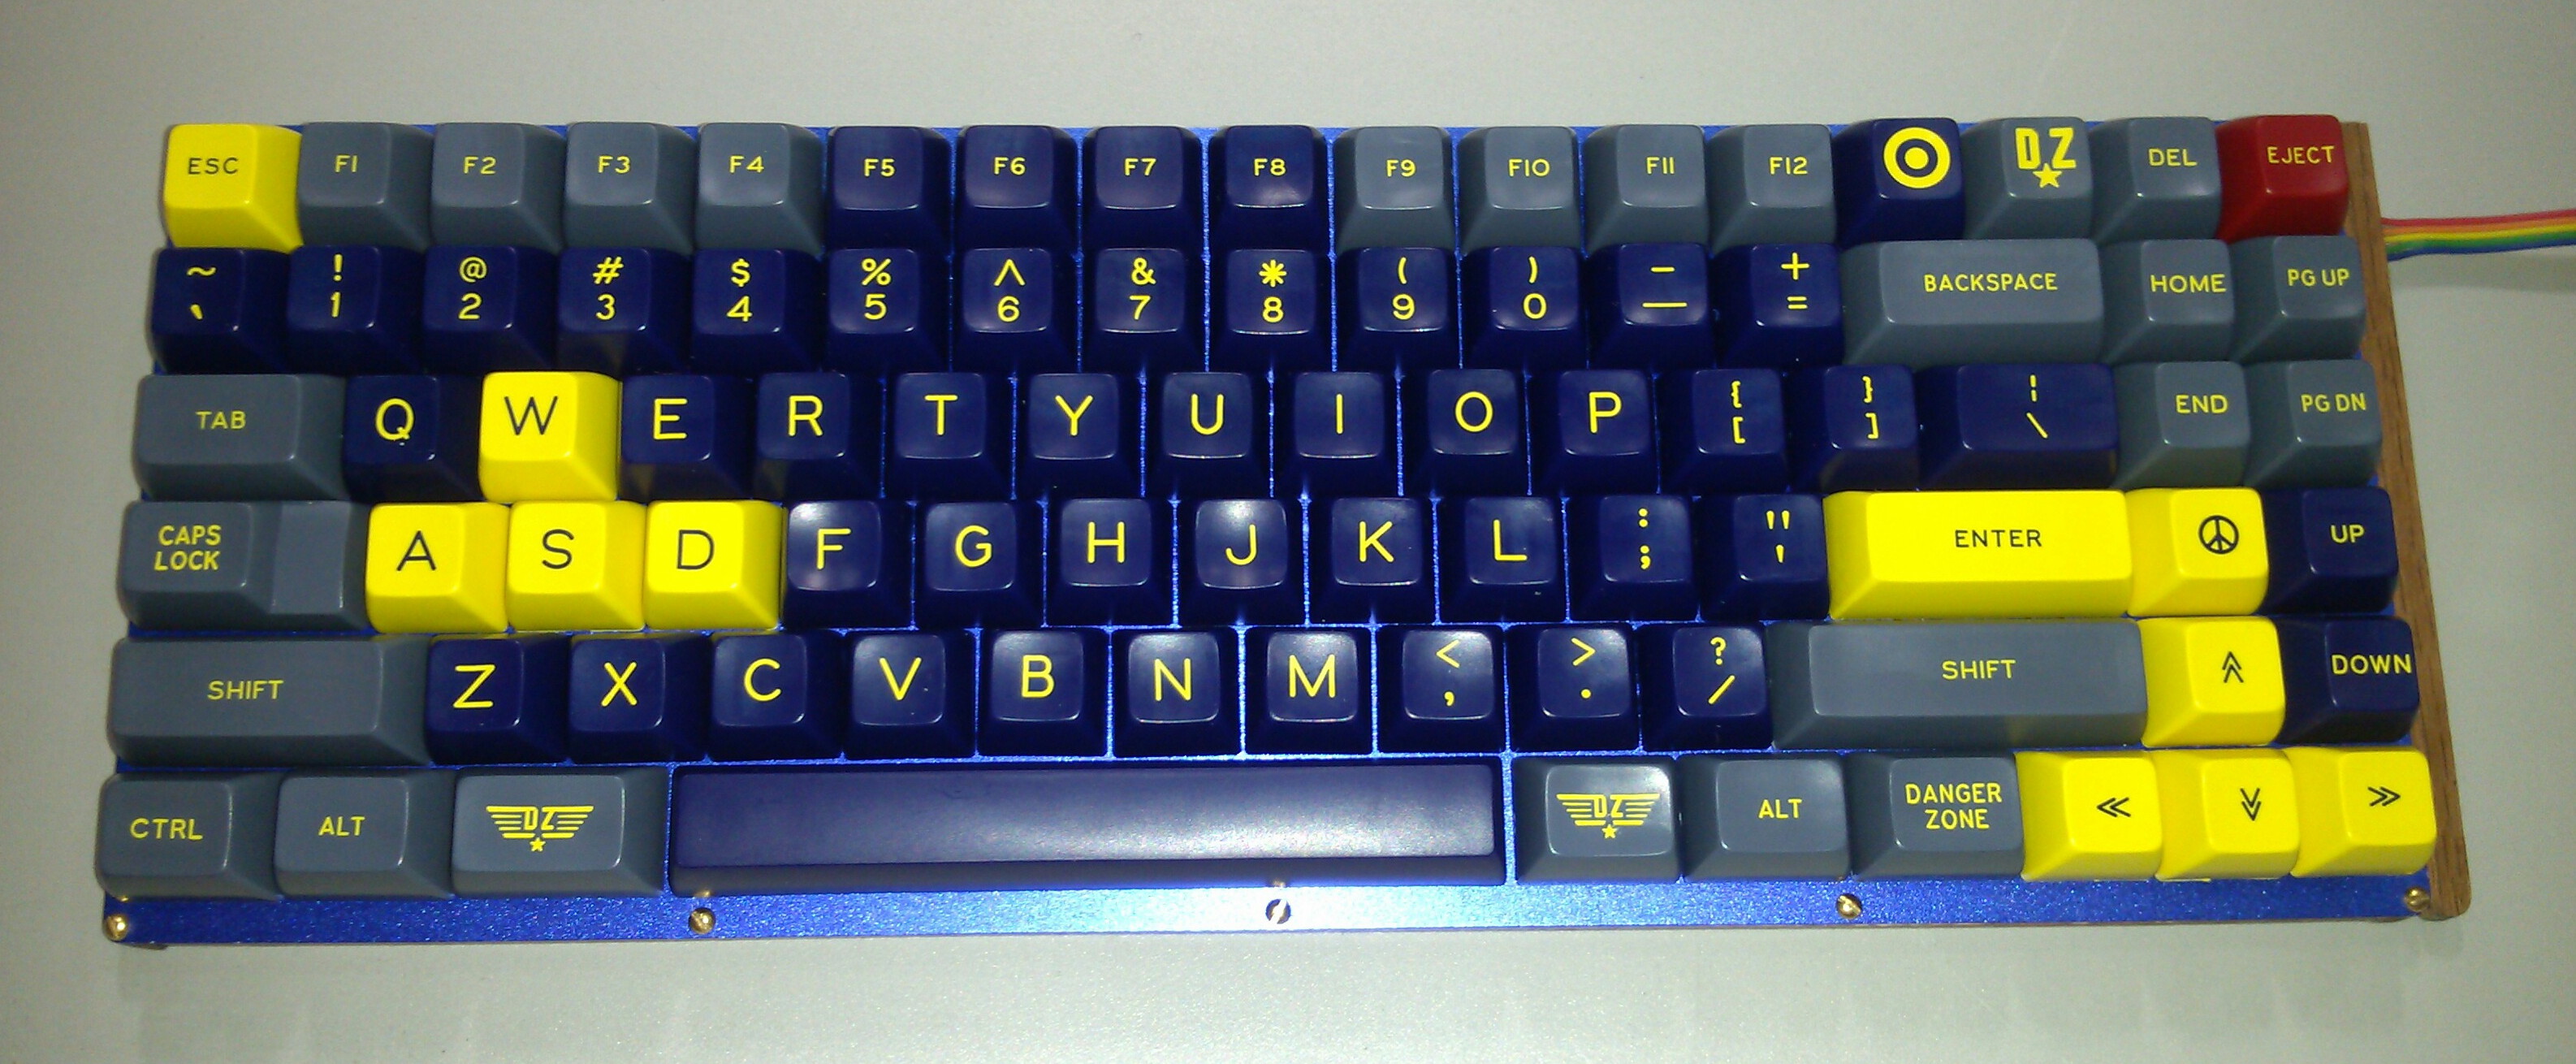 Keyboard76_DangerZone.jpg